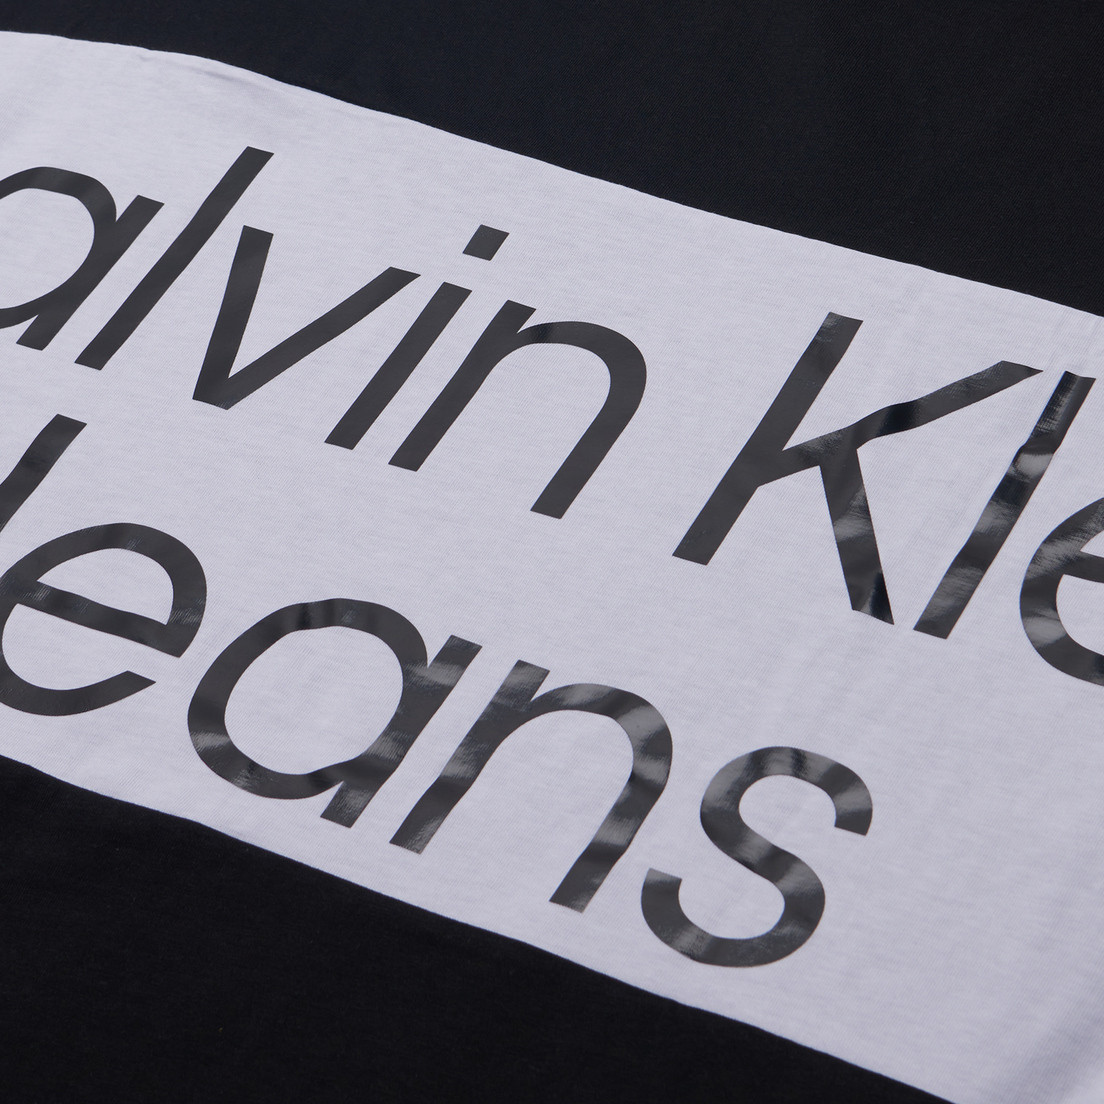 Calvin Klein Jeans Мужская футболка Bold Logo Colorblock